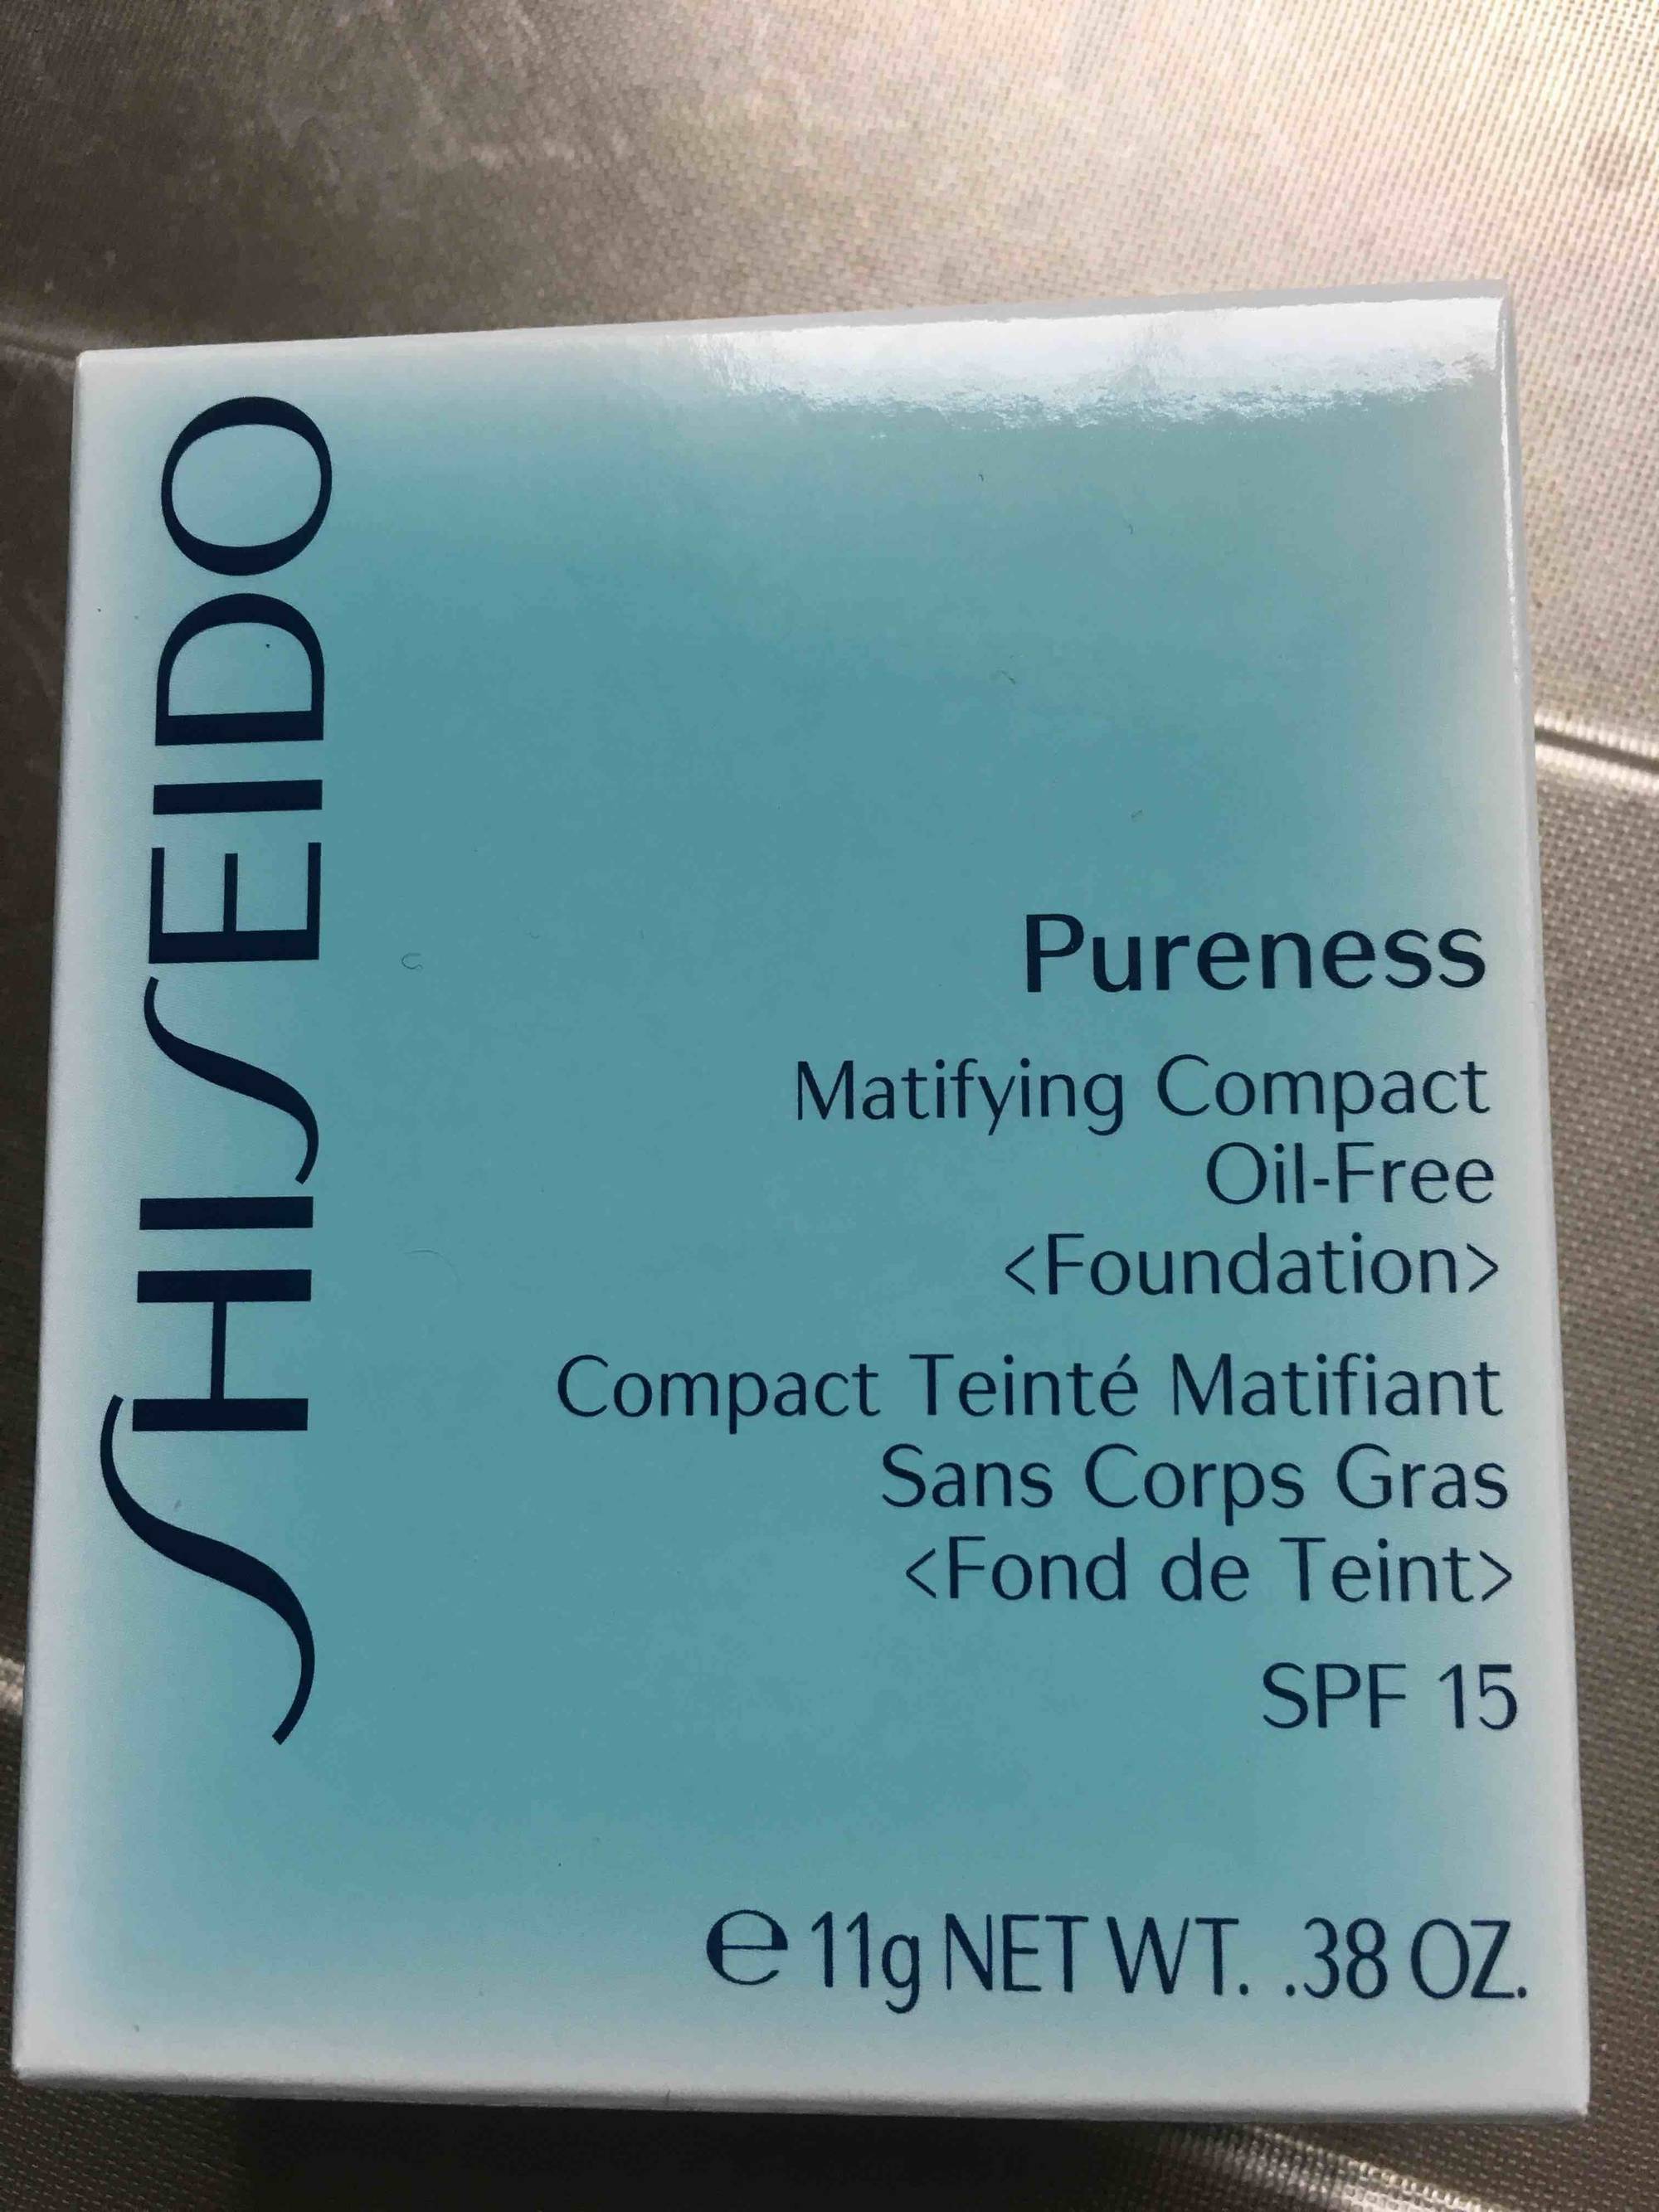 SHISEIDO - Pureness - Compact teinté matifiant